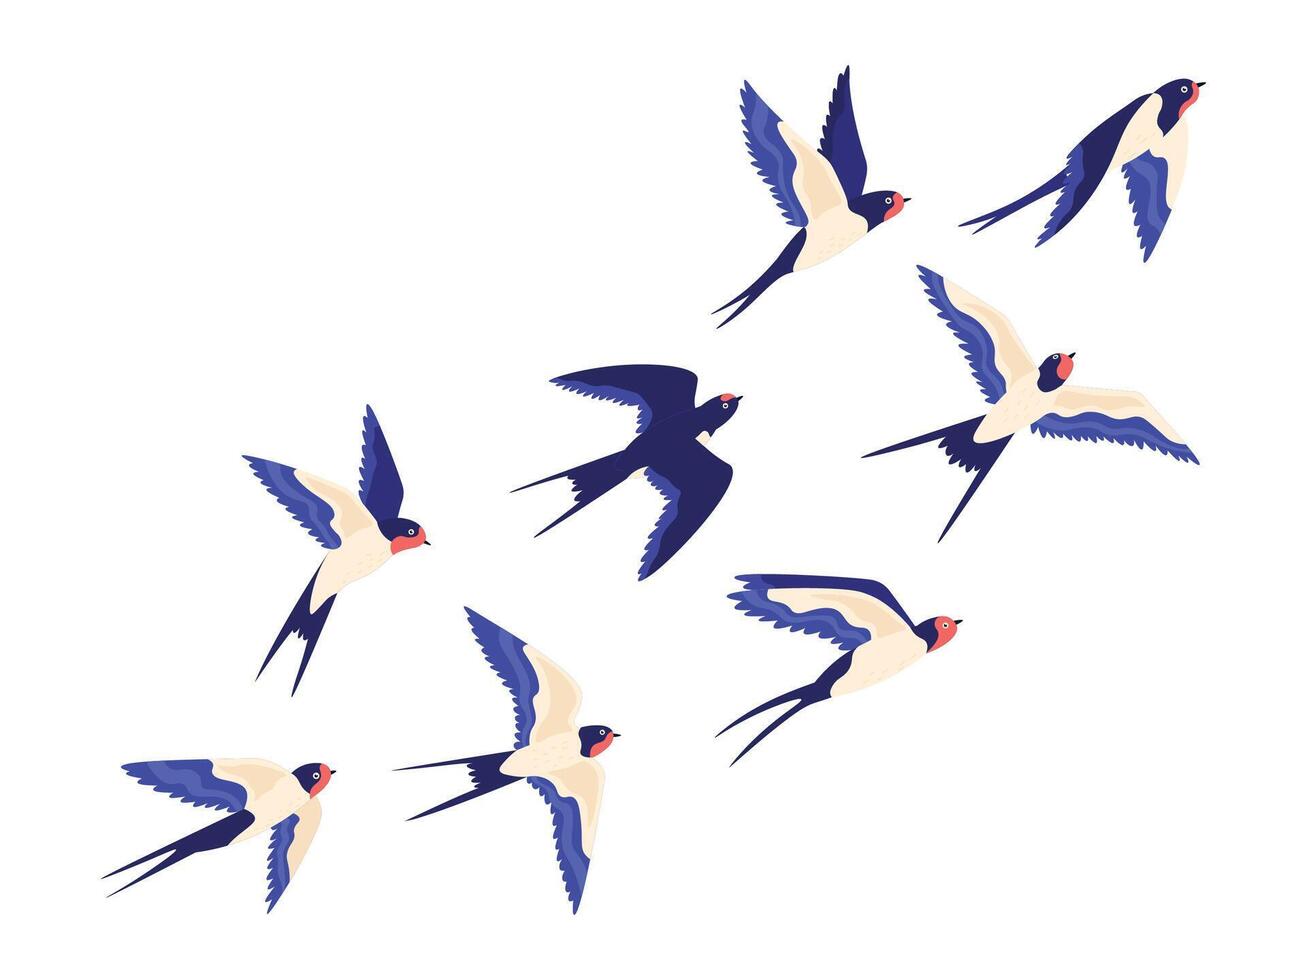 vlak klein slikken vogel kudde vliegend in lucht. tekenfilm groep van schuur zwaluwen vrijheid vlucht in lucht. vredig vector illustratie met vogelstand